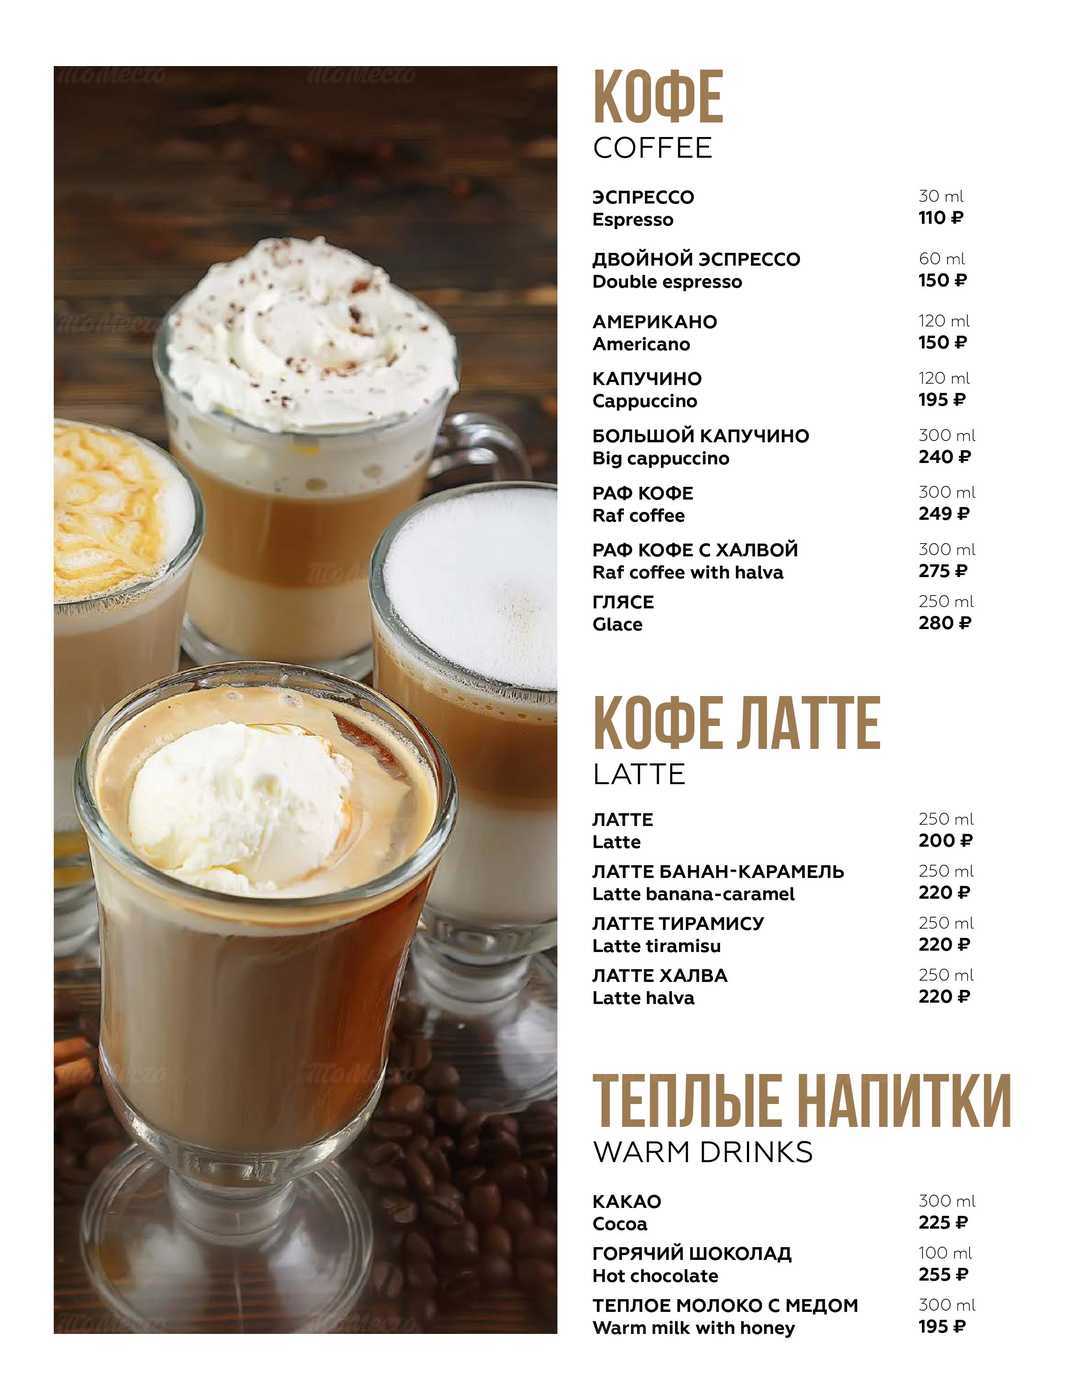 Рецепт кофе раф